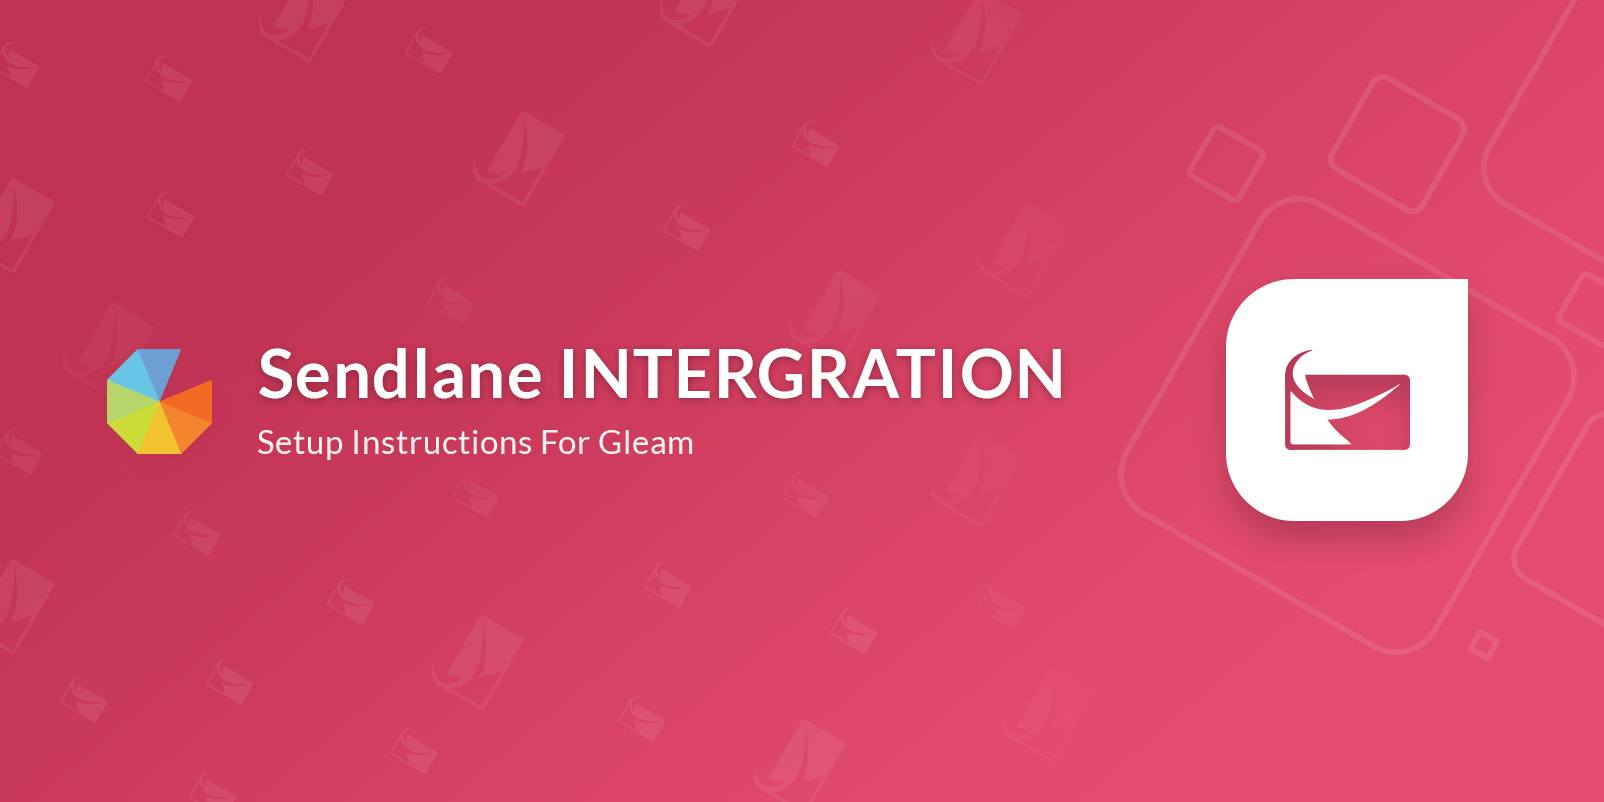 Sendlane integration setup instructions for Gleam